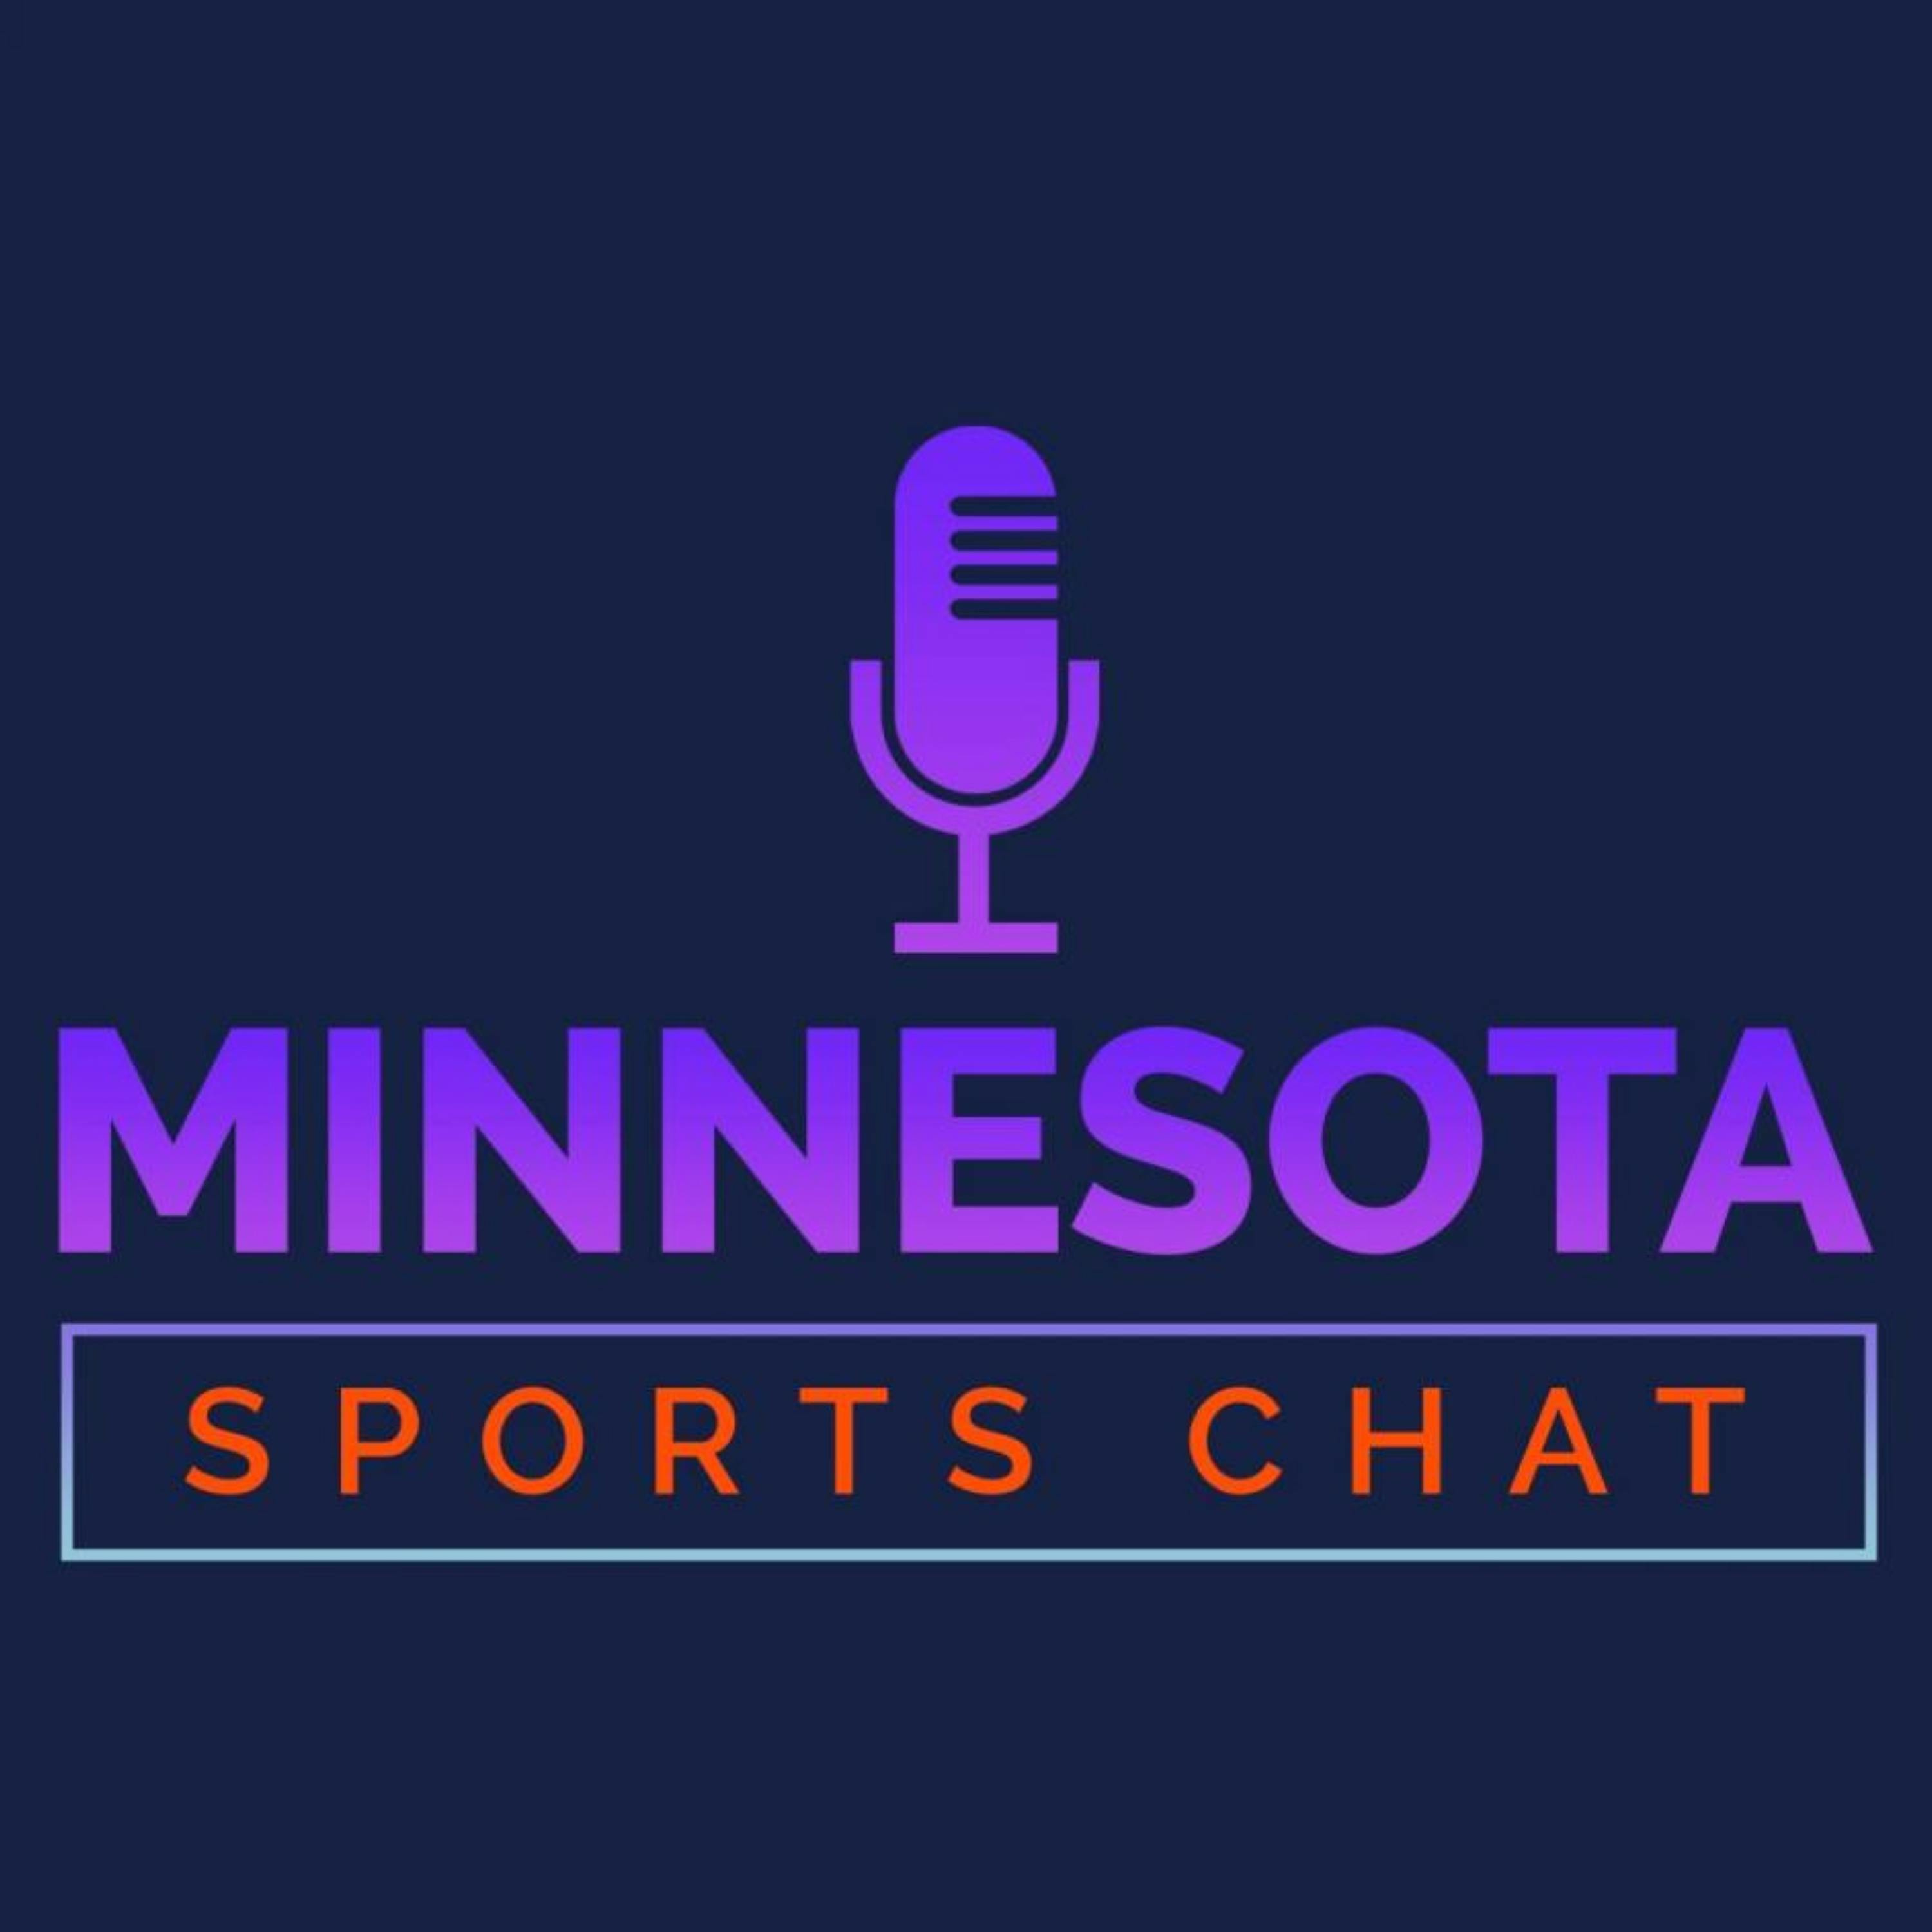 MINNESOTA SPORTS CHAT: Minnesota Twins and St. Paul Saints Chat!